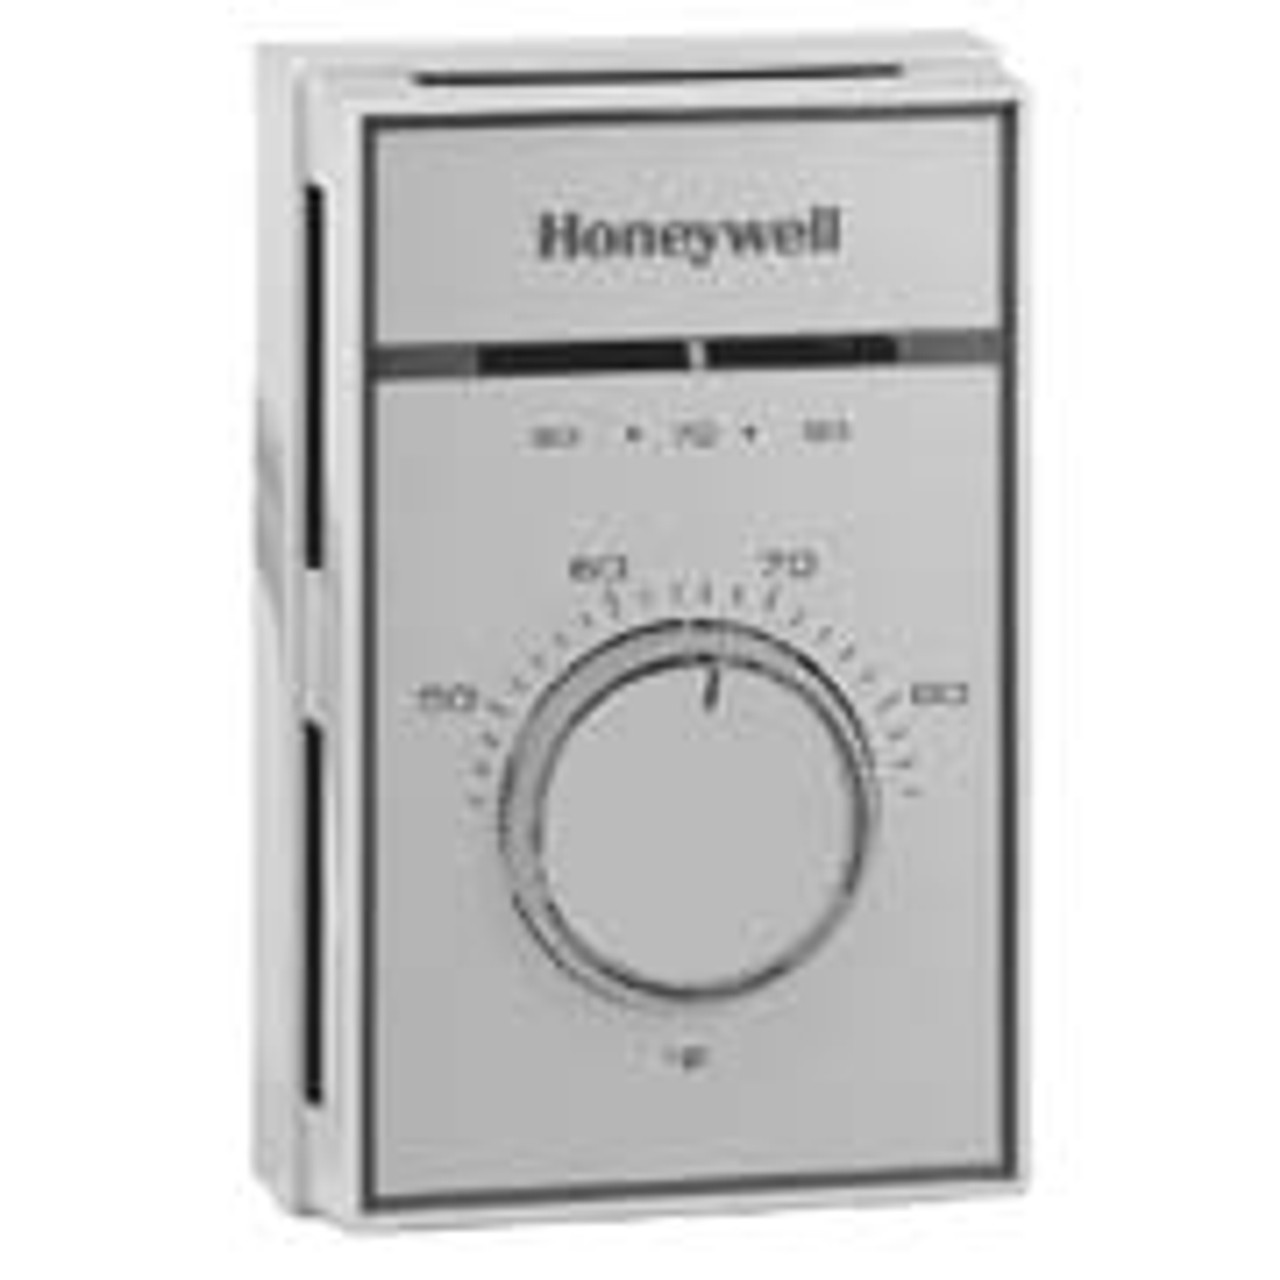 Honeywell T451a3005 Line Voltage Thermostat Range 44-86F